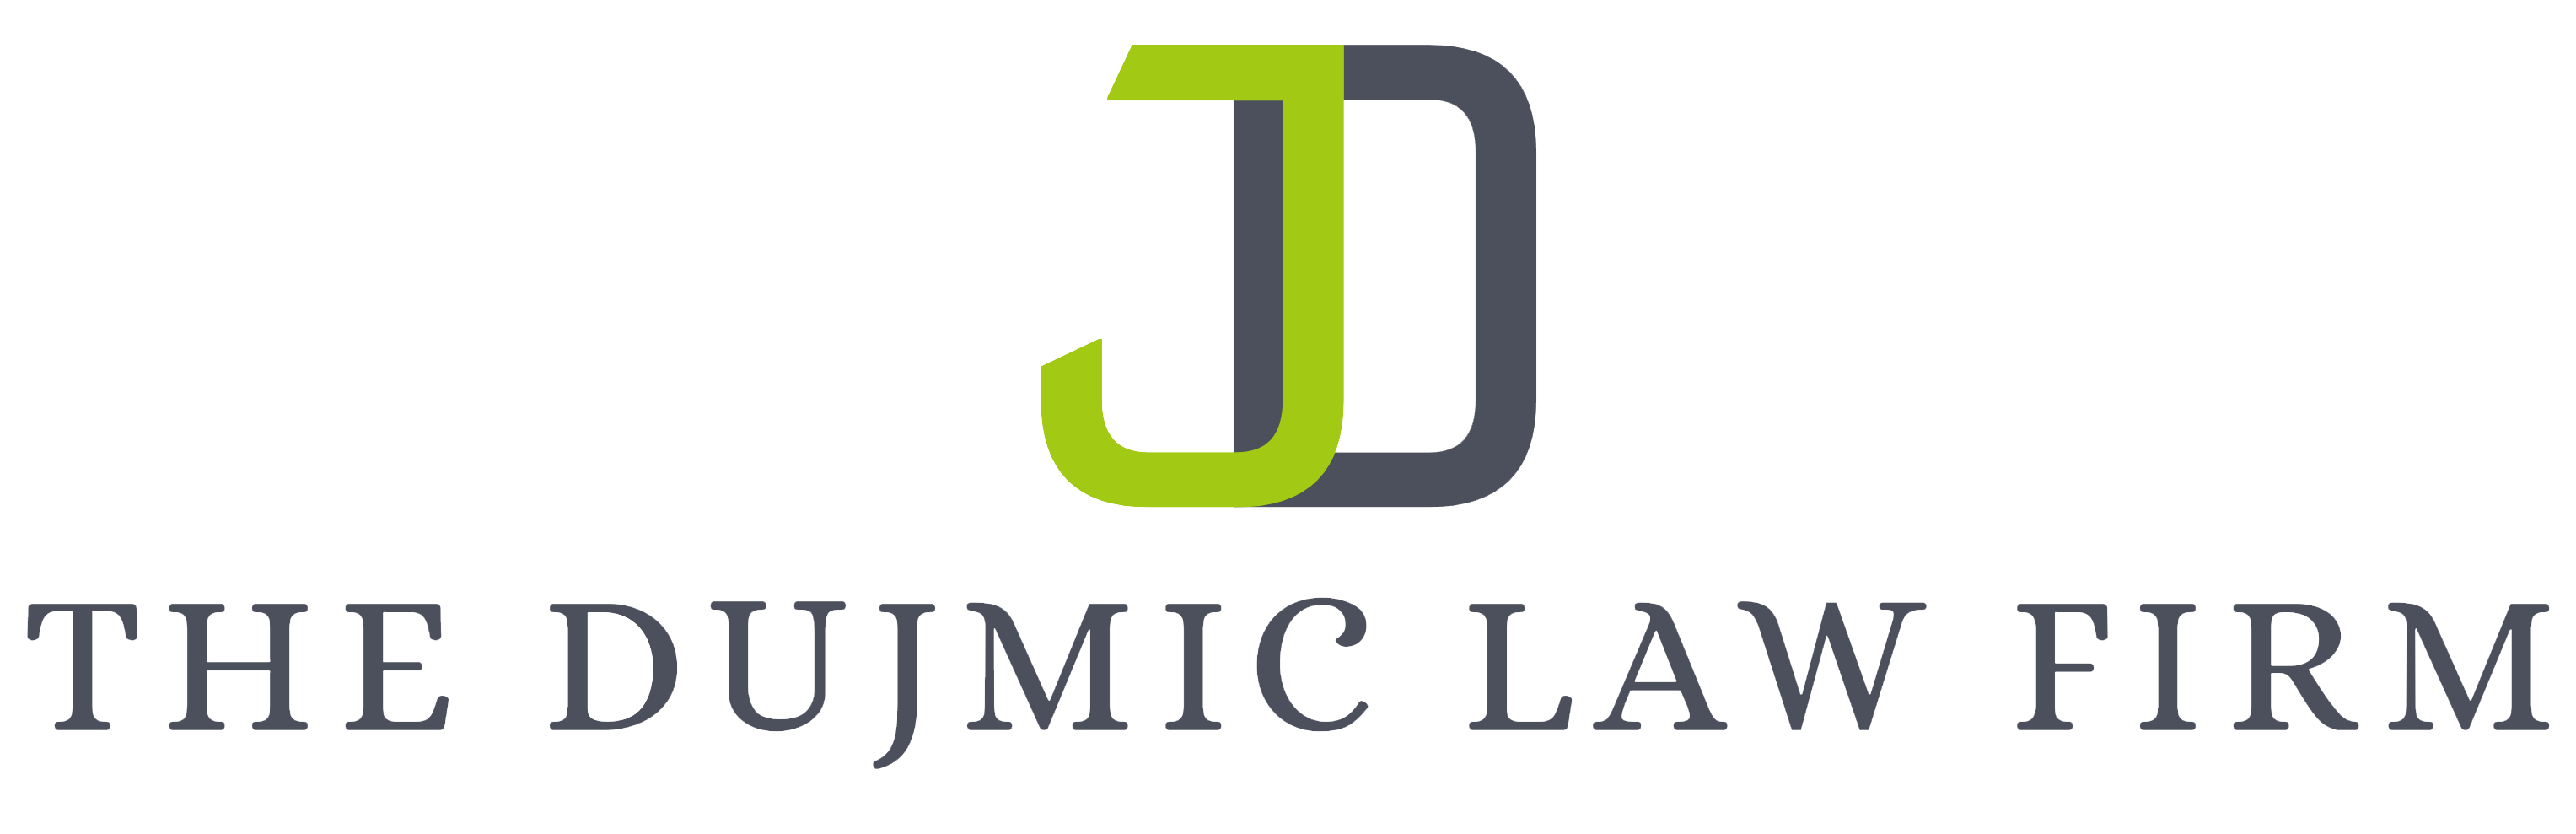 Dujmic Law Firm Divorce & Matrimonial Law